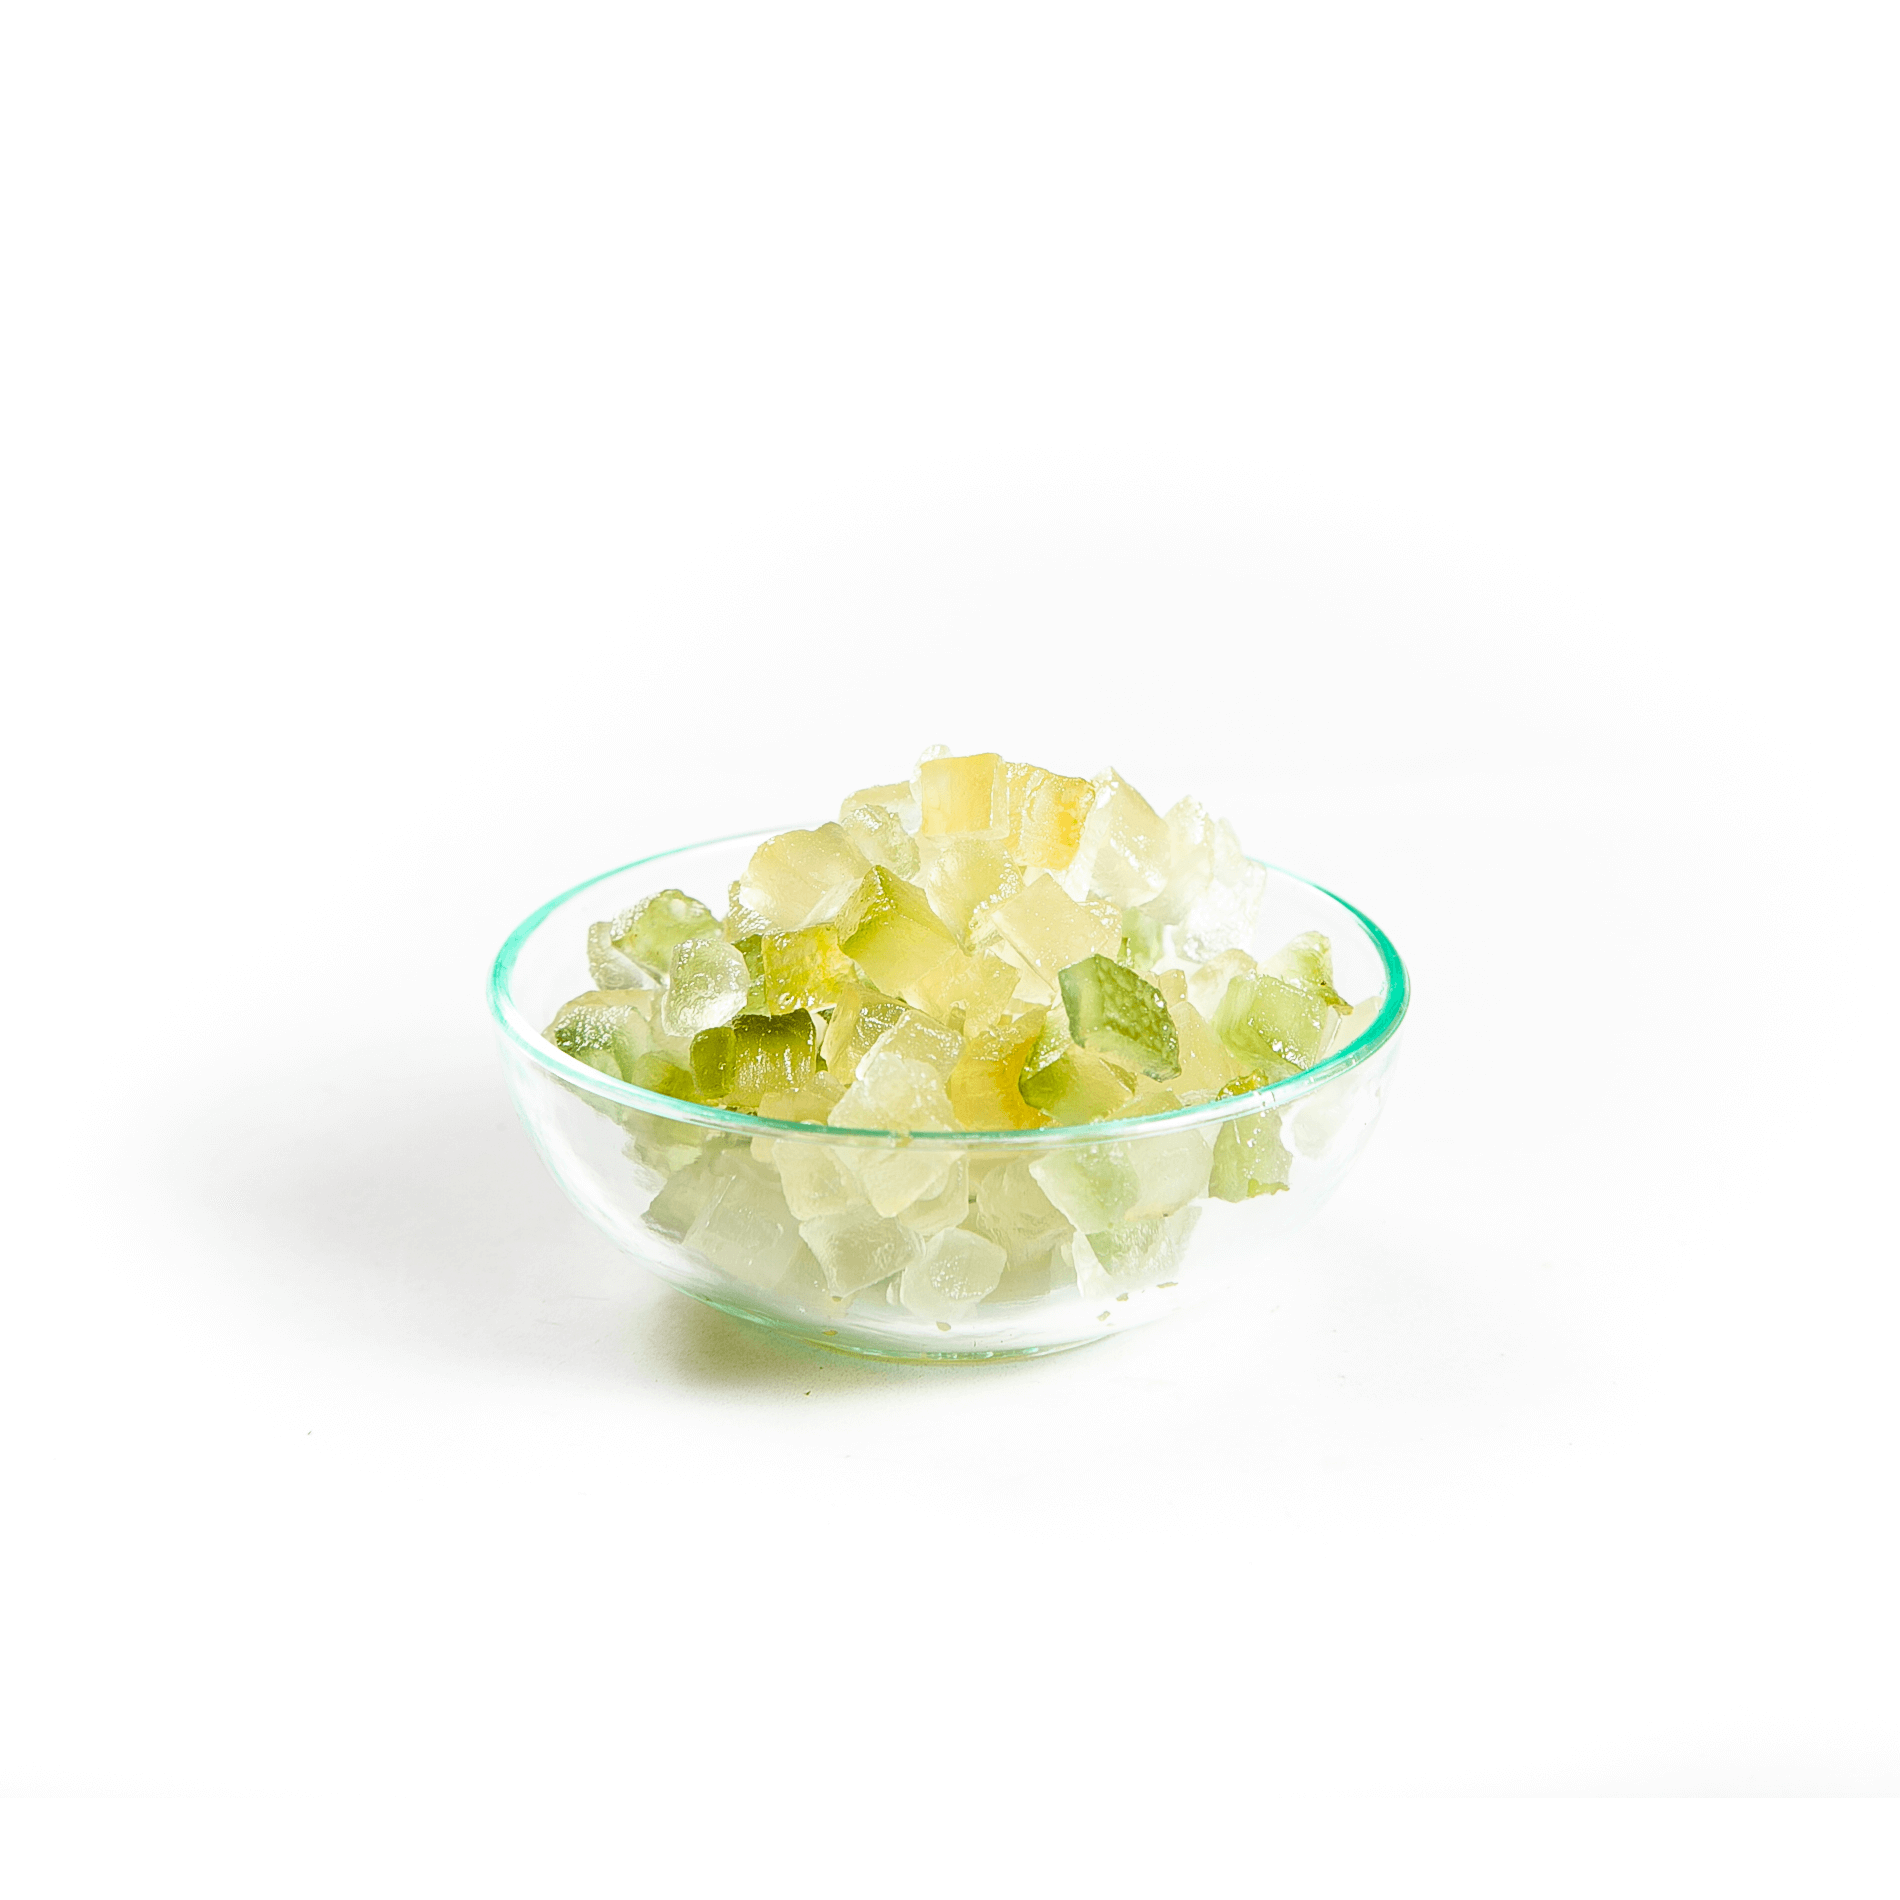 Zitronat